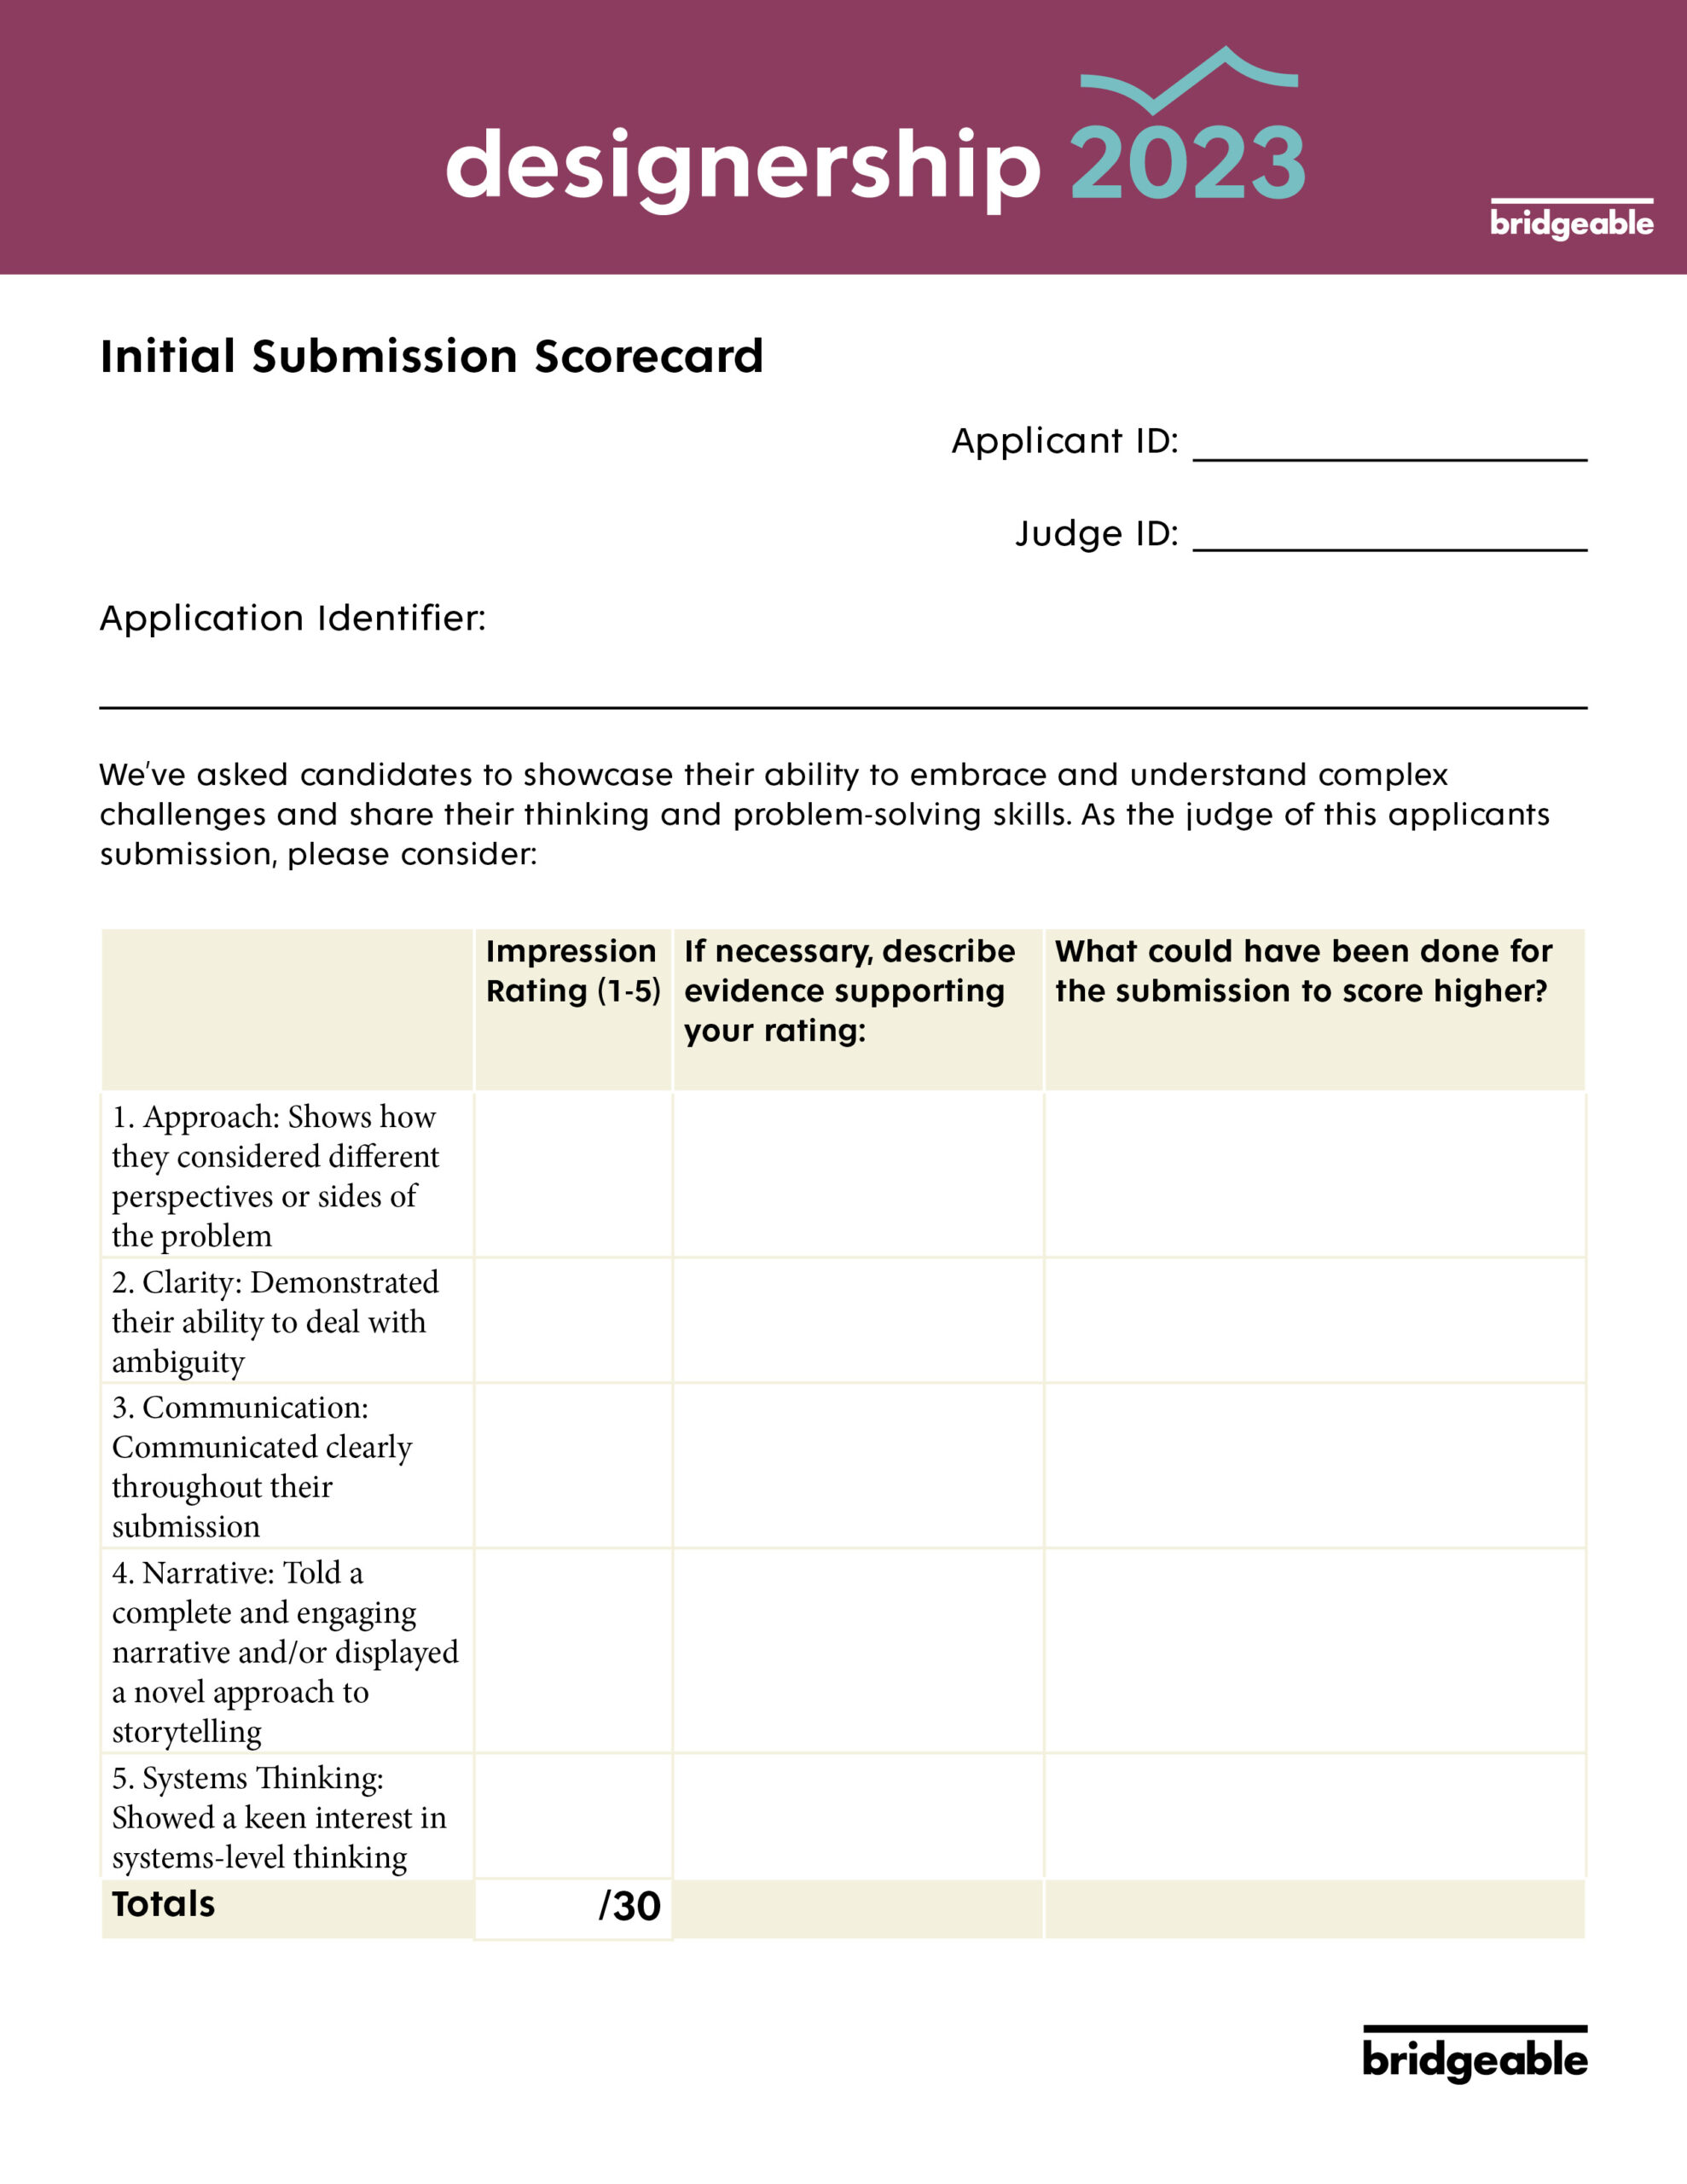 Application Scorecard Image